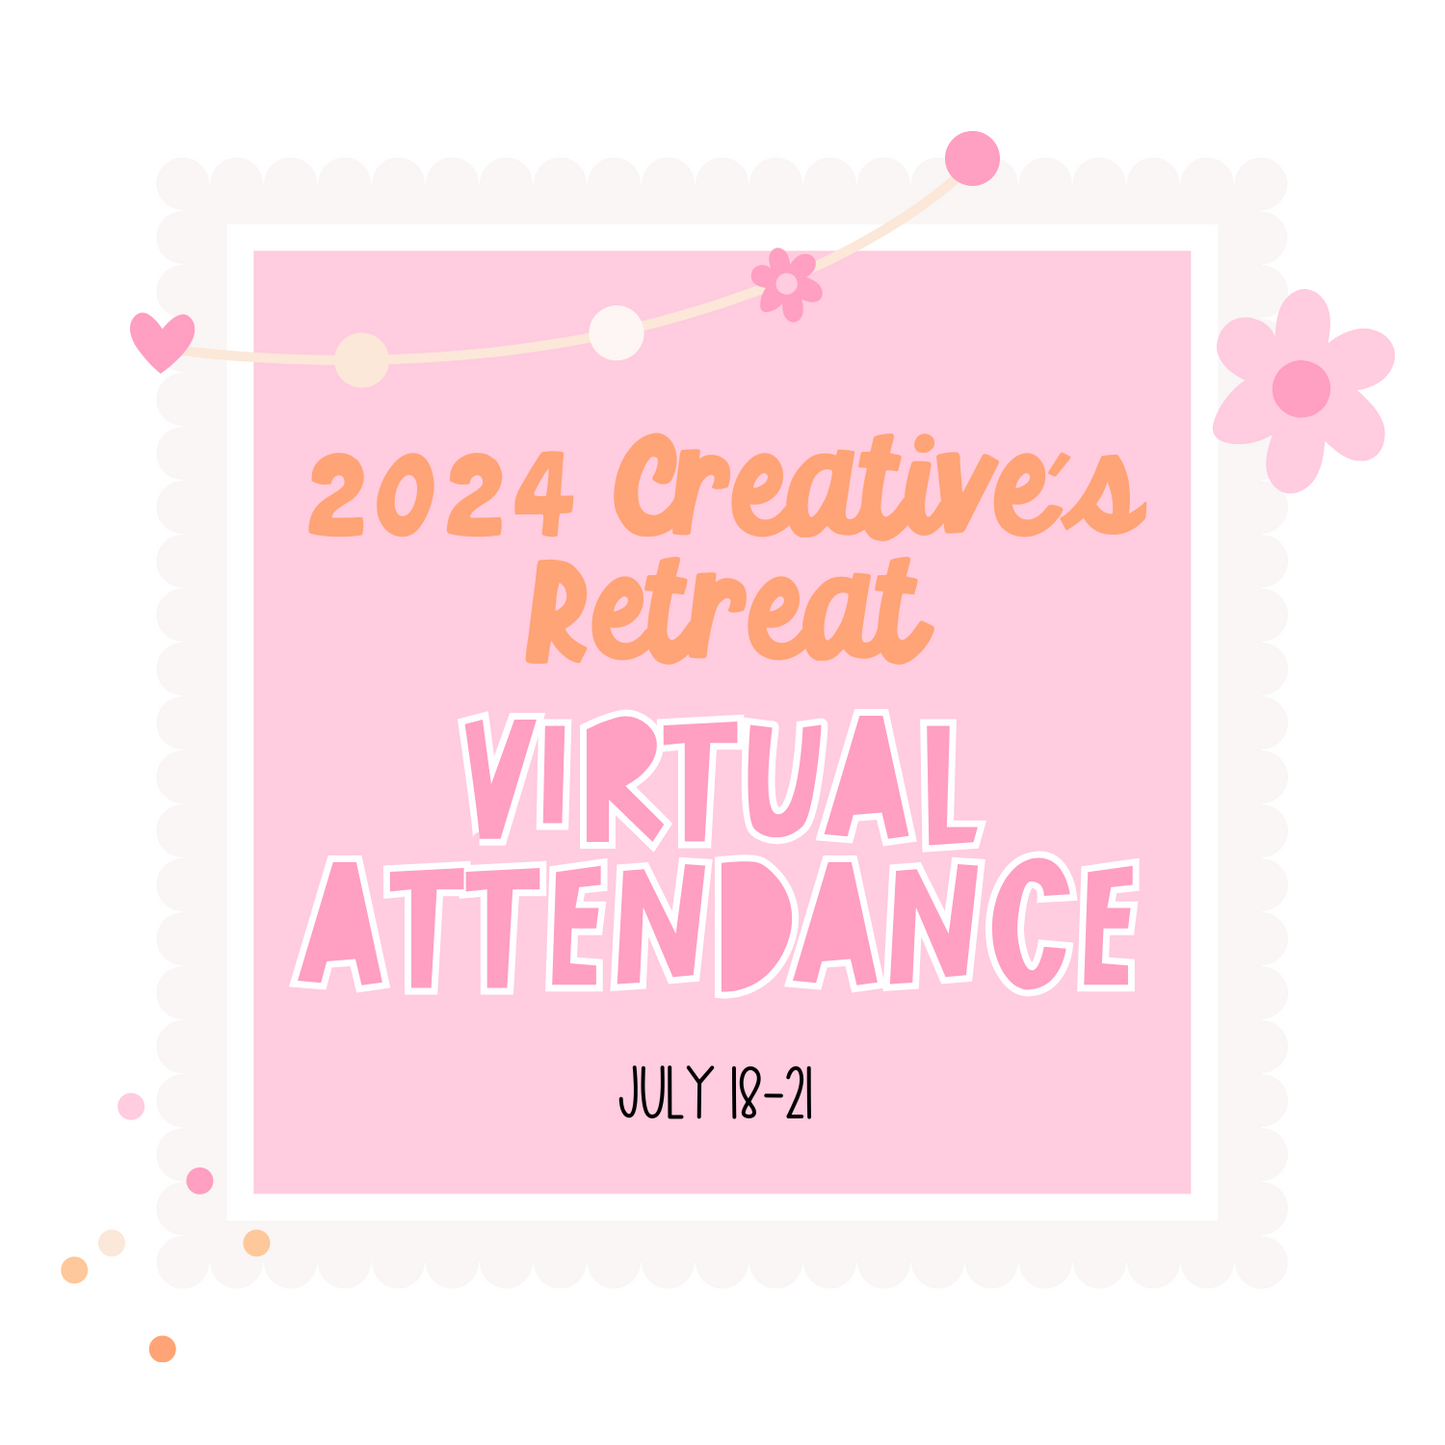 2024 Creative's Retreat Virtual Attendance Ticket